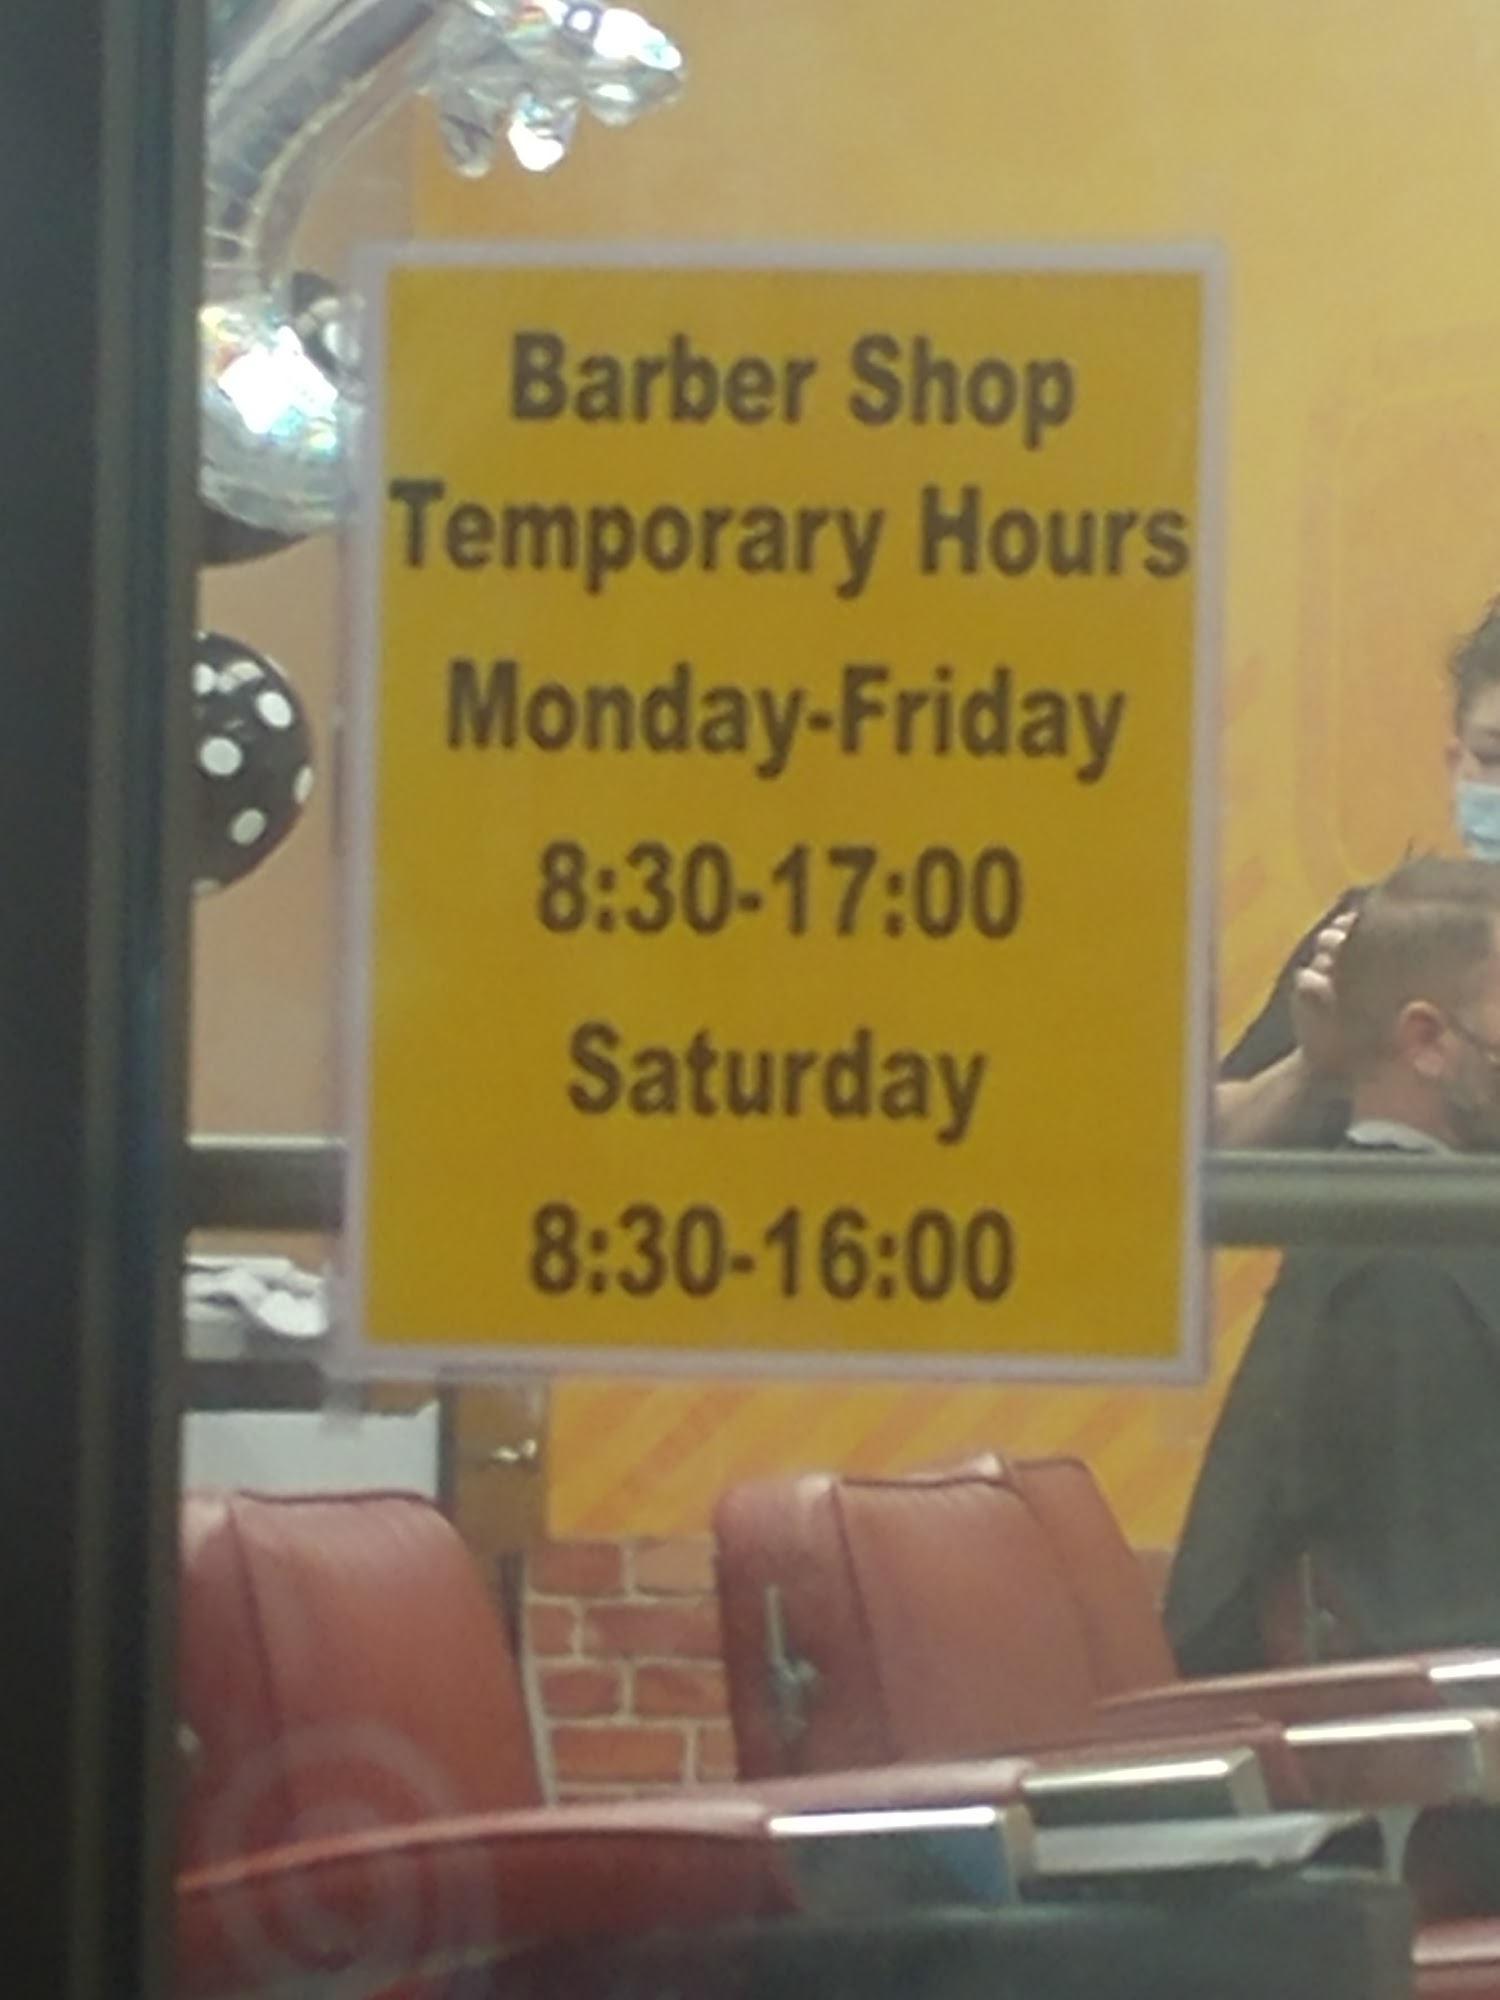 Hill AFB Barber Shop 5845 E Ave, Hill AFB Utah 84056